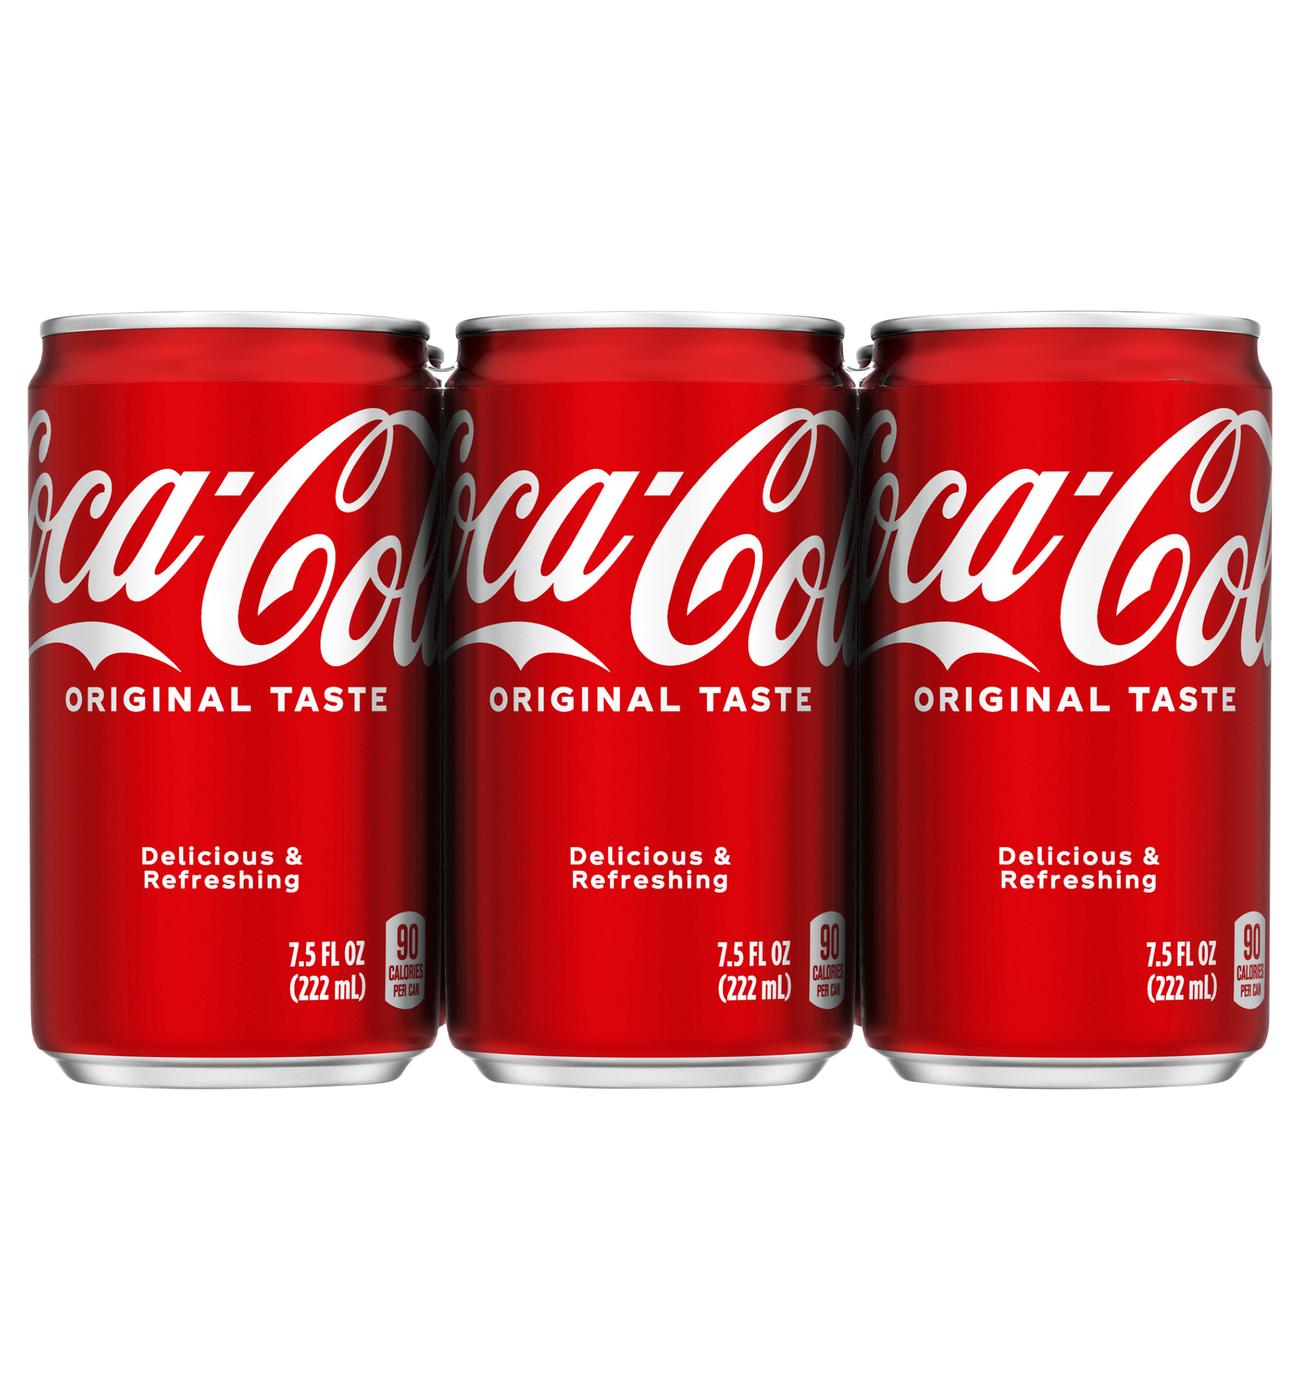 Coca-Cola Soda Pop, 20 fl oz Bottle 